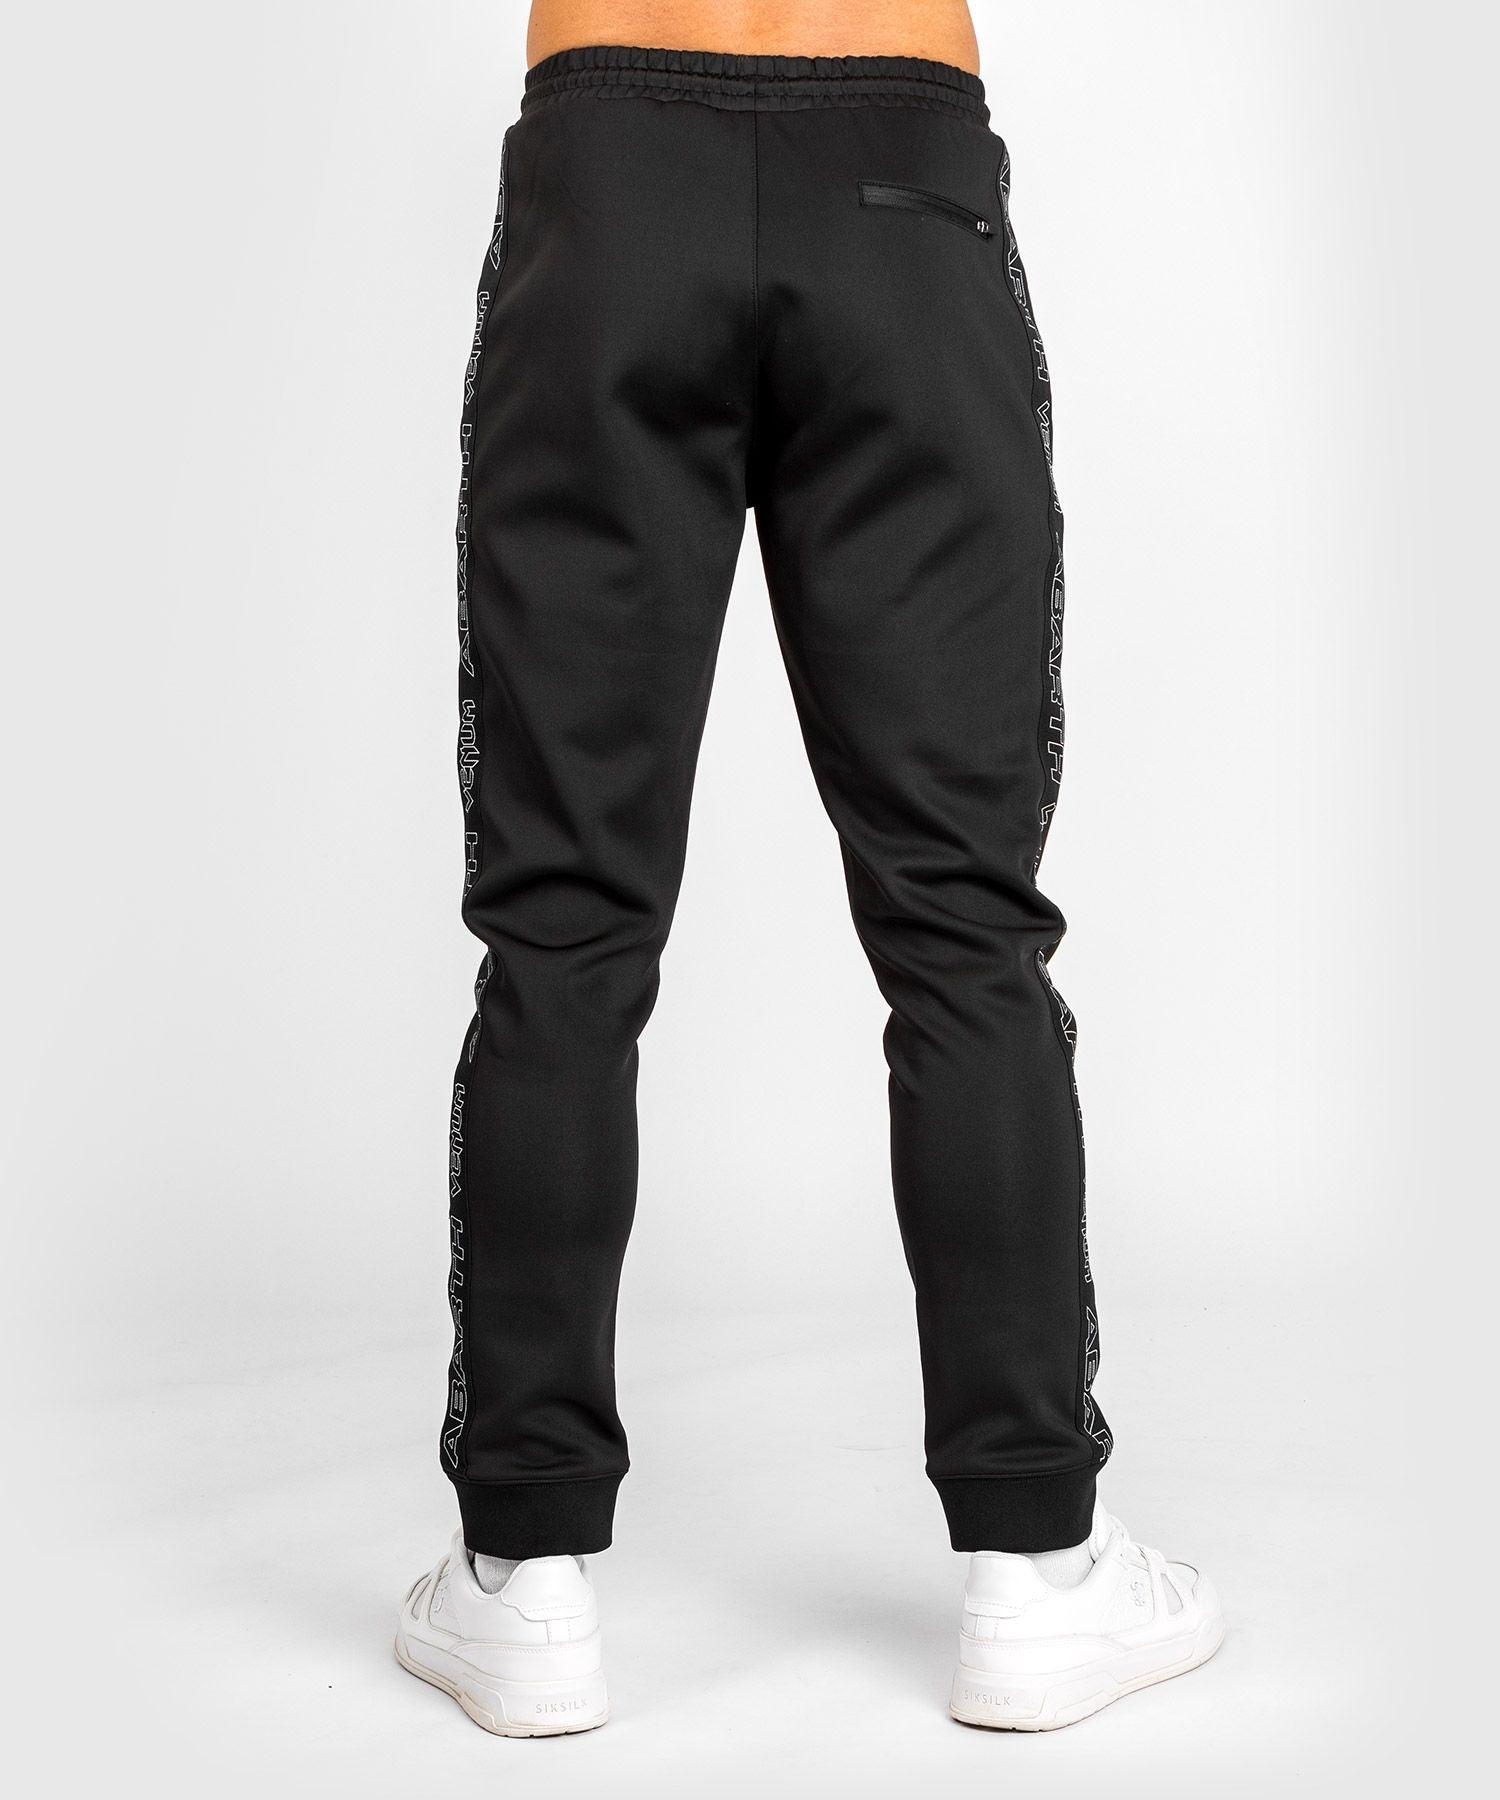 Pantalon de Jogging Venum Abarth #1 - Noir